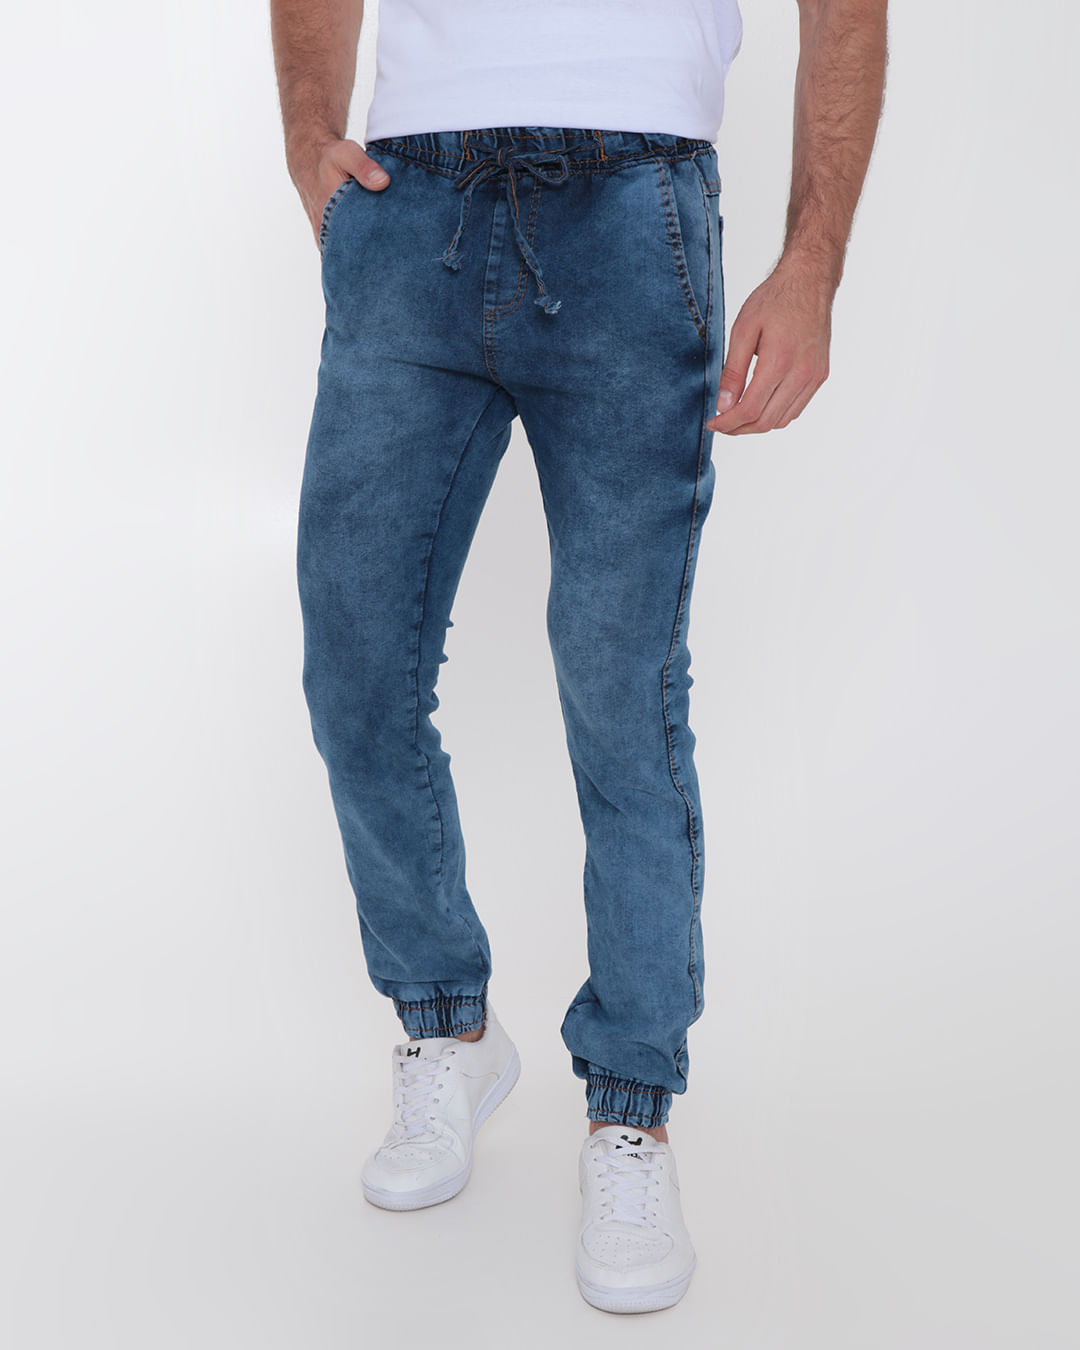 Calça Jeans Masculina Jogger Azul